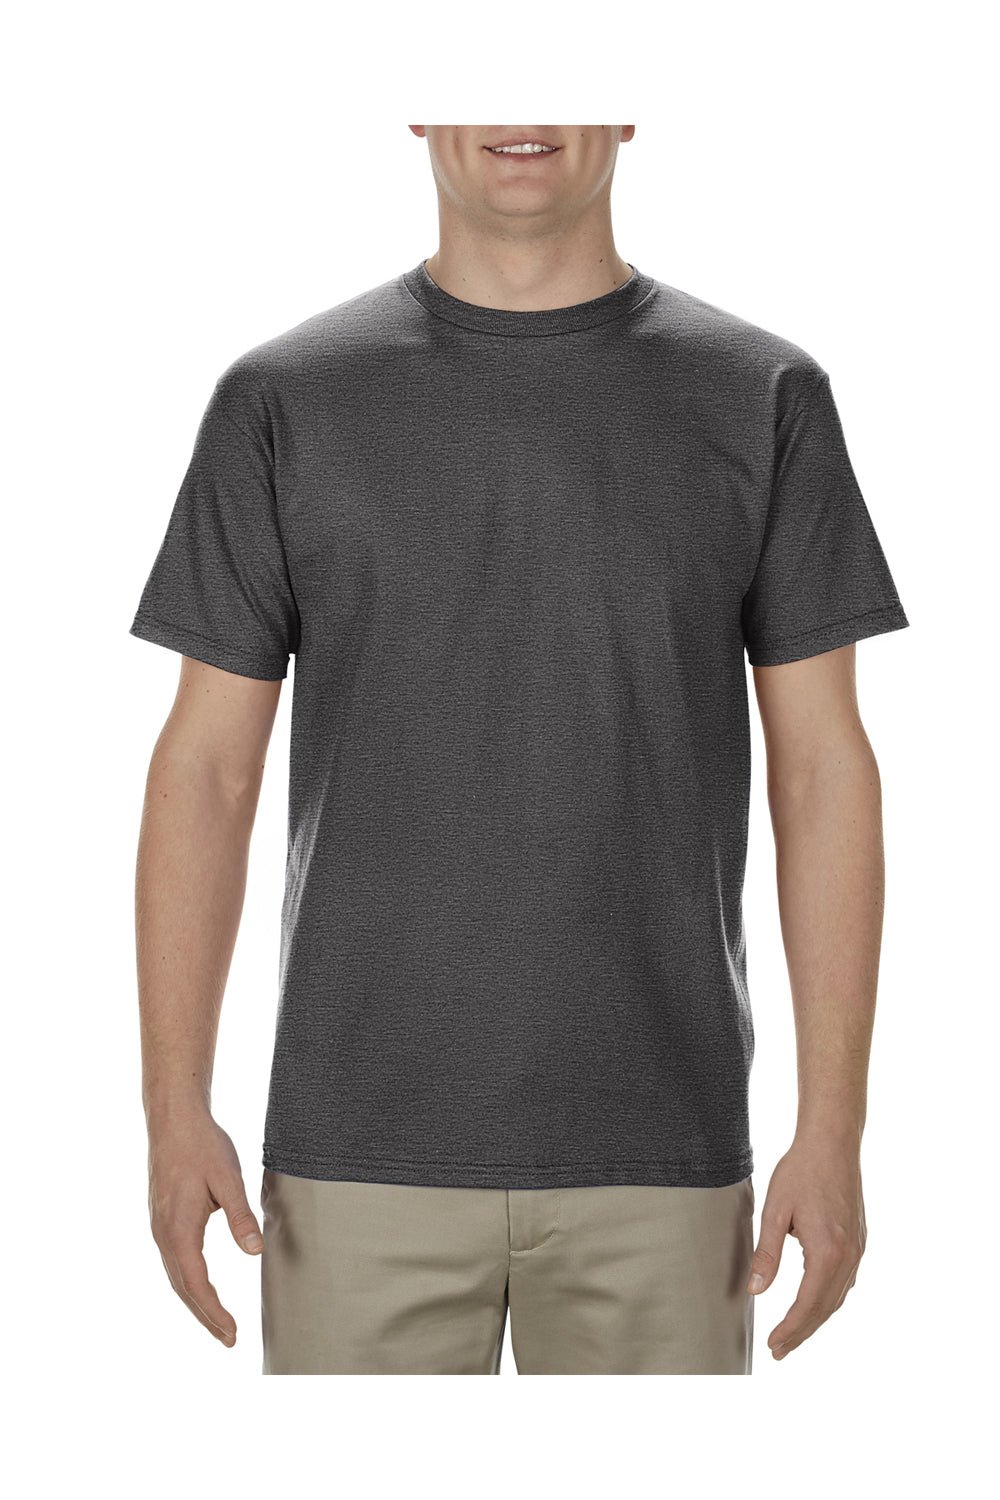 Alstyle AL1701 Mens Soft Spun Short Sleeve Crewneck T-Shirt Heather Charcoal Grey Front